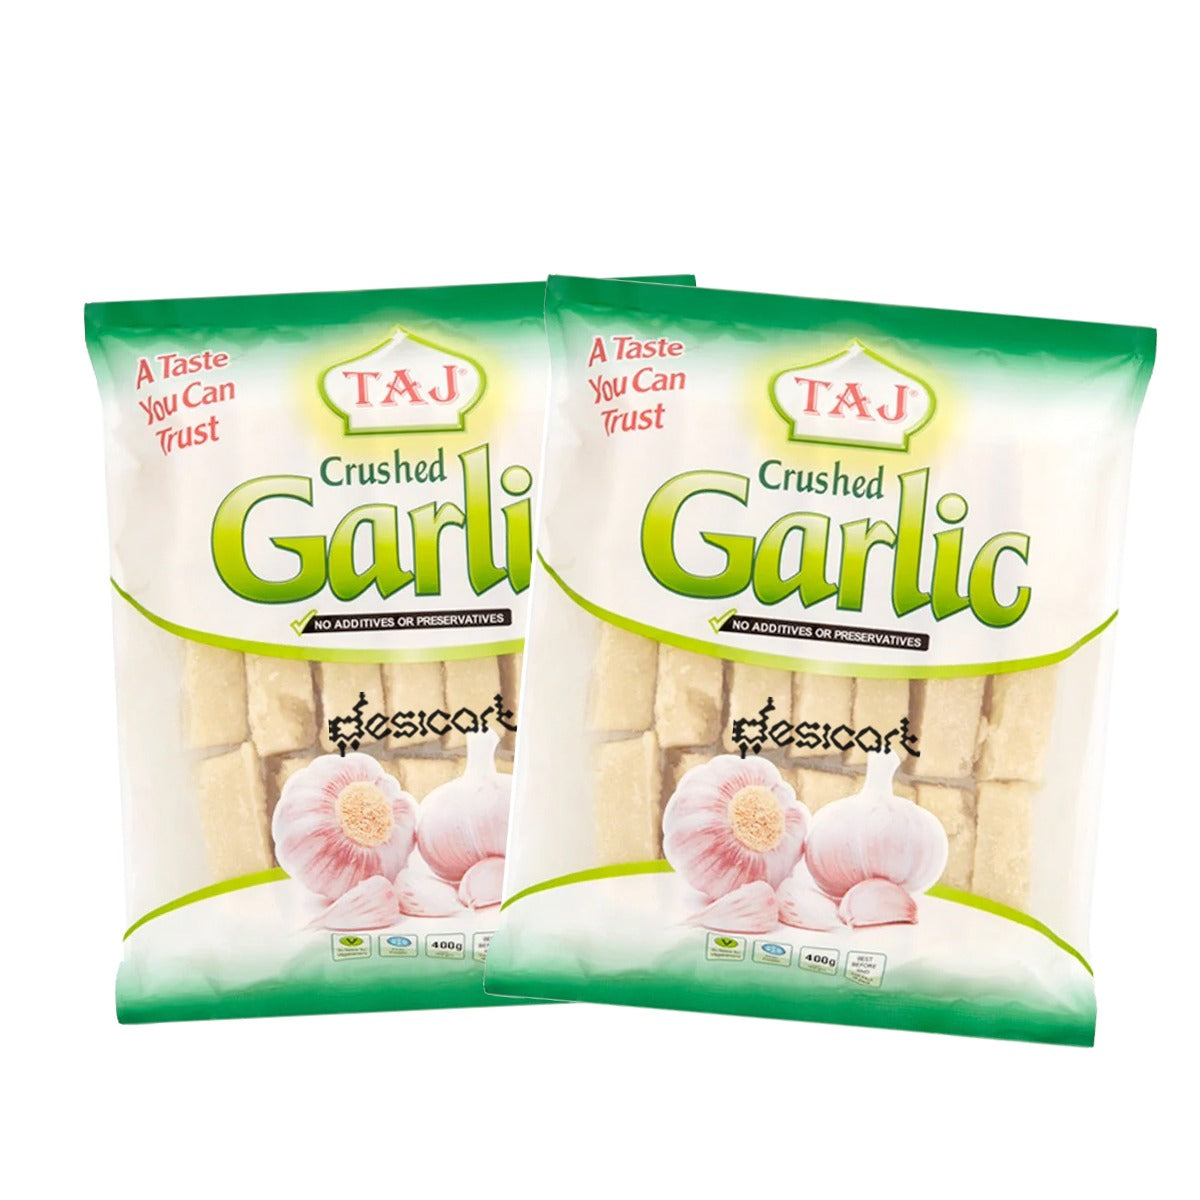 Taj Crushed Garlic (Pack of 2)400g